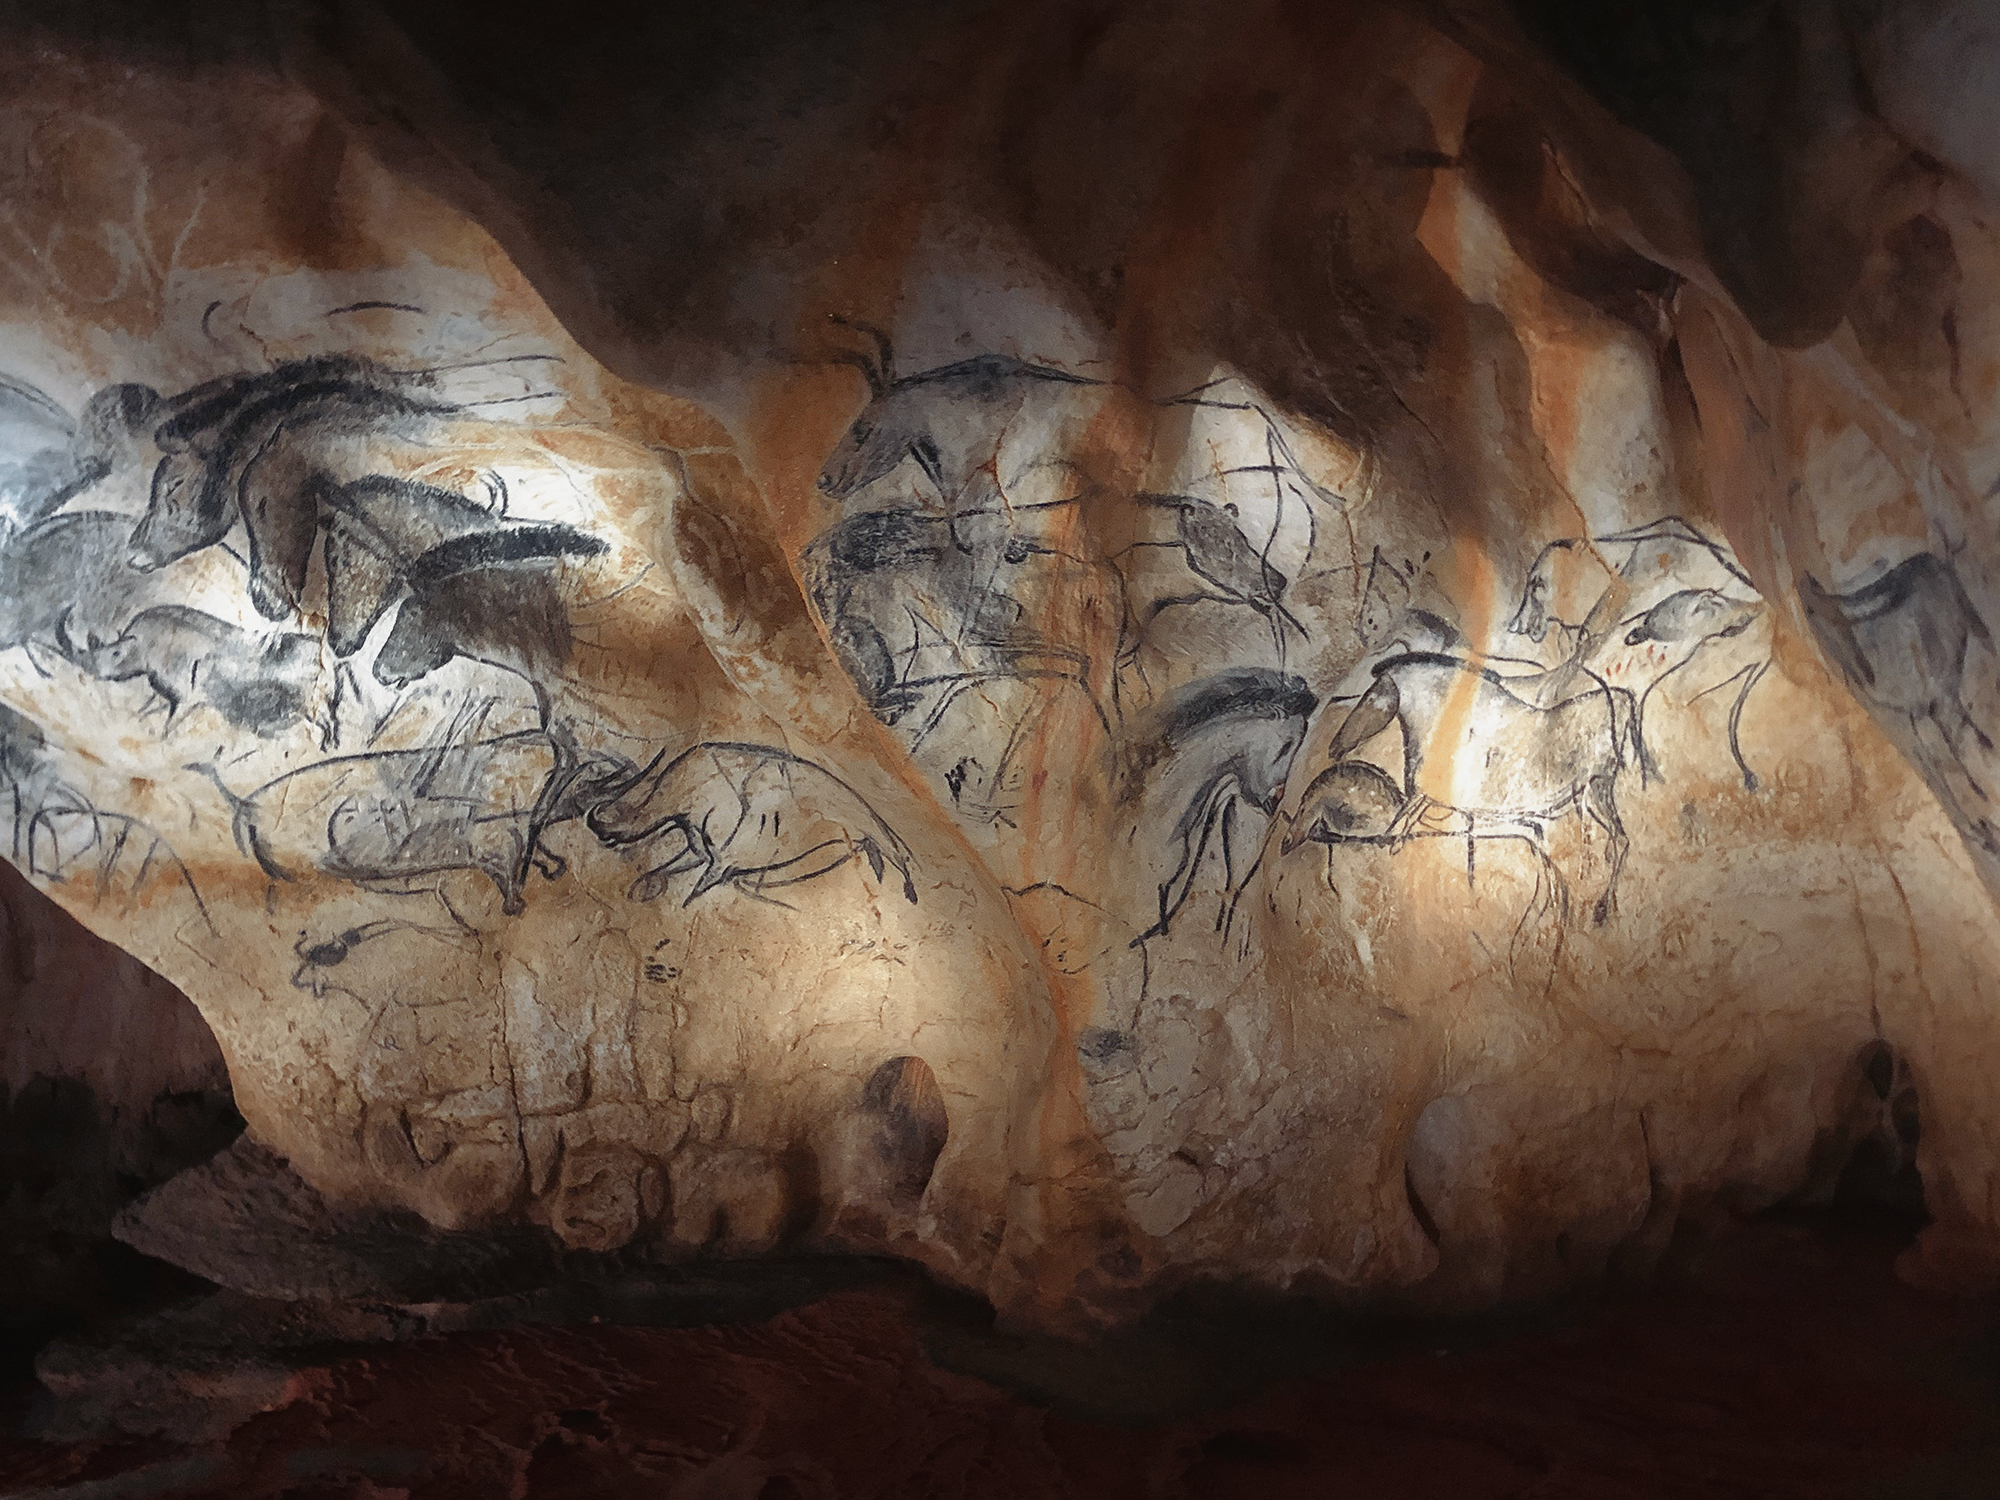 Chauvet Cave Replica